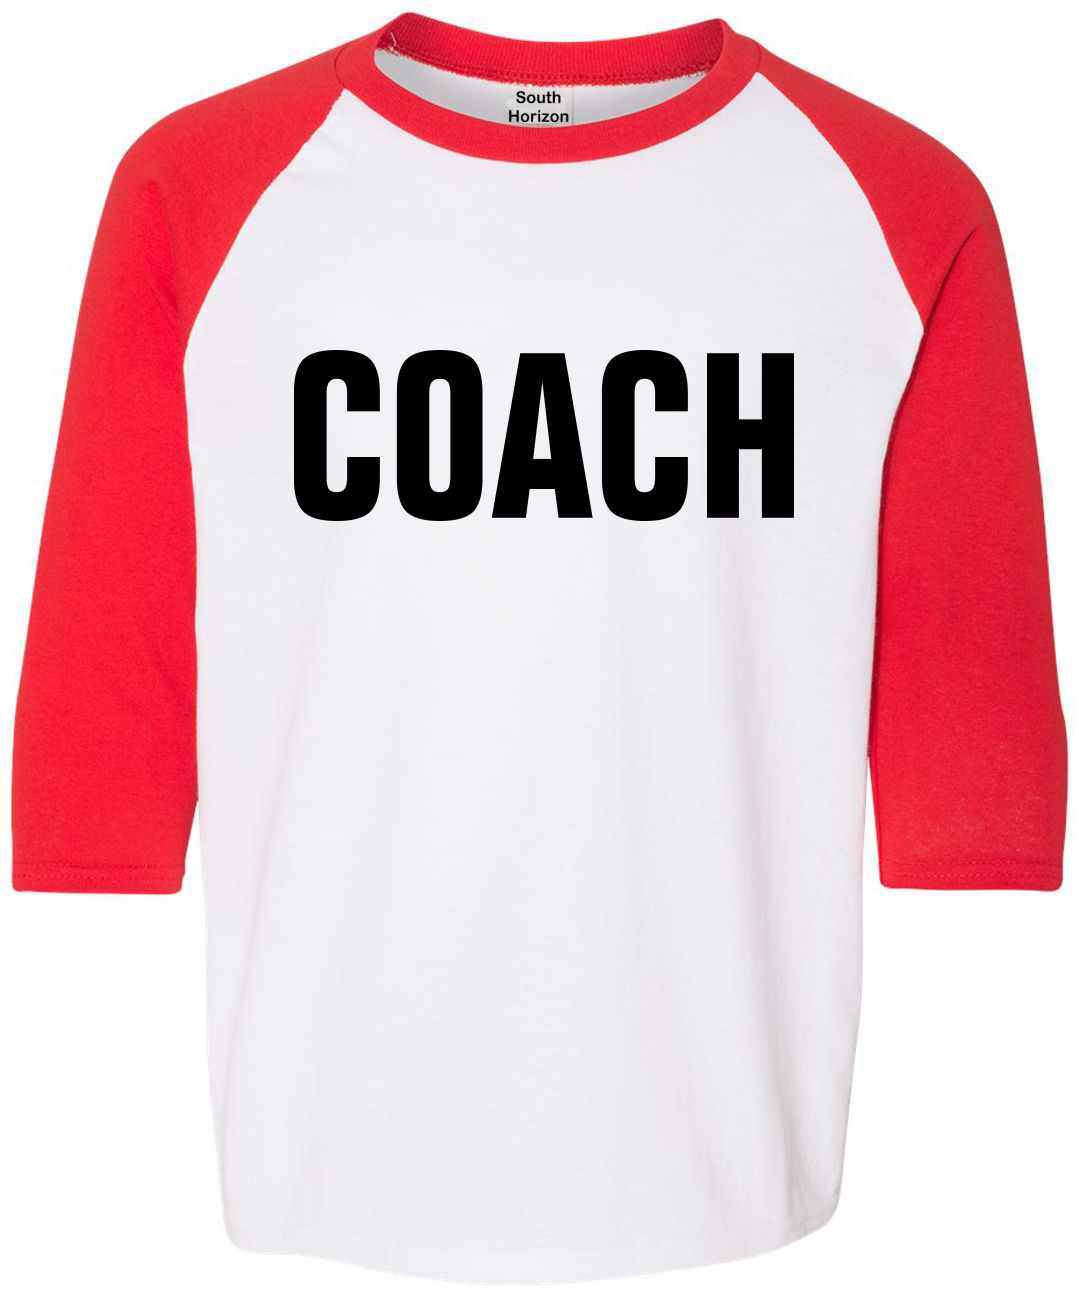 COACH on Youth Baseball Shirt